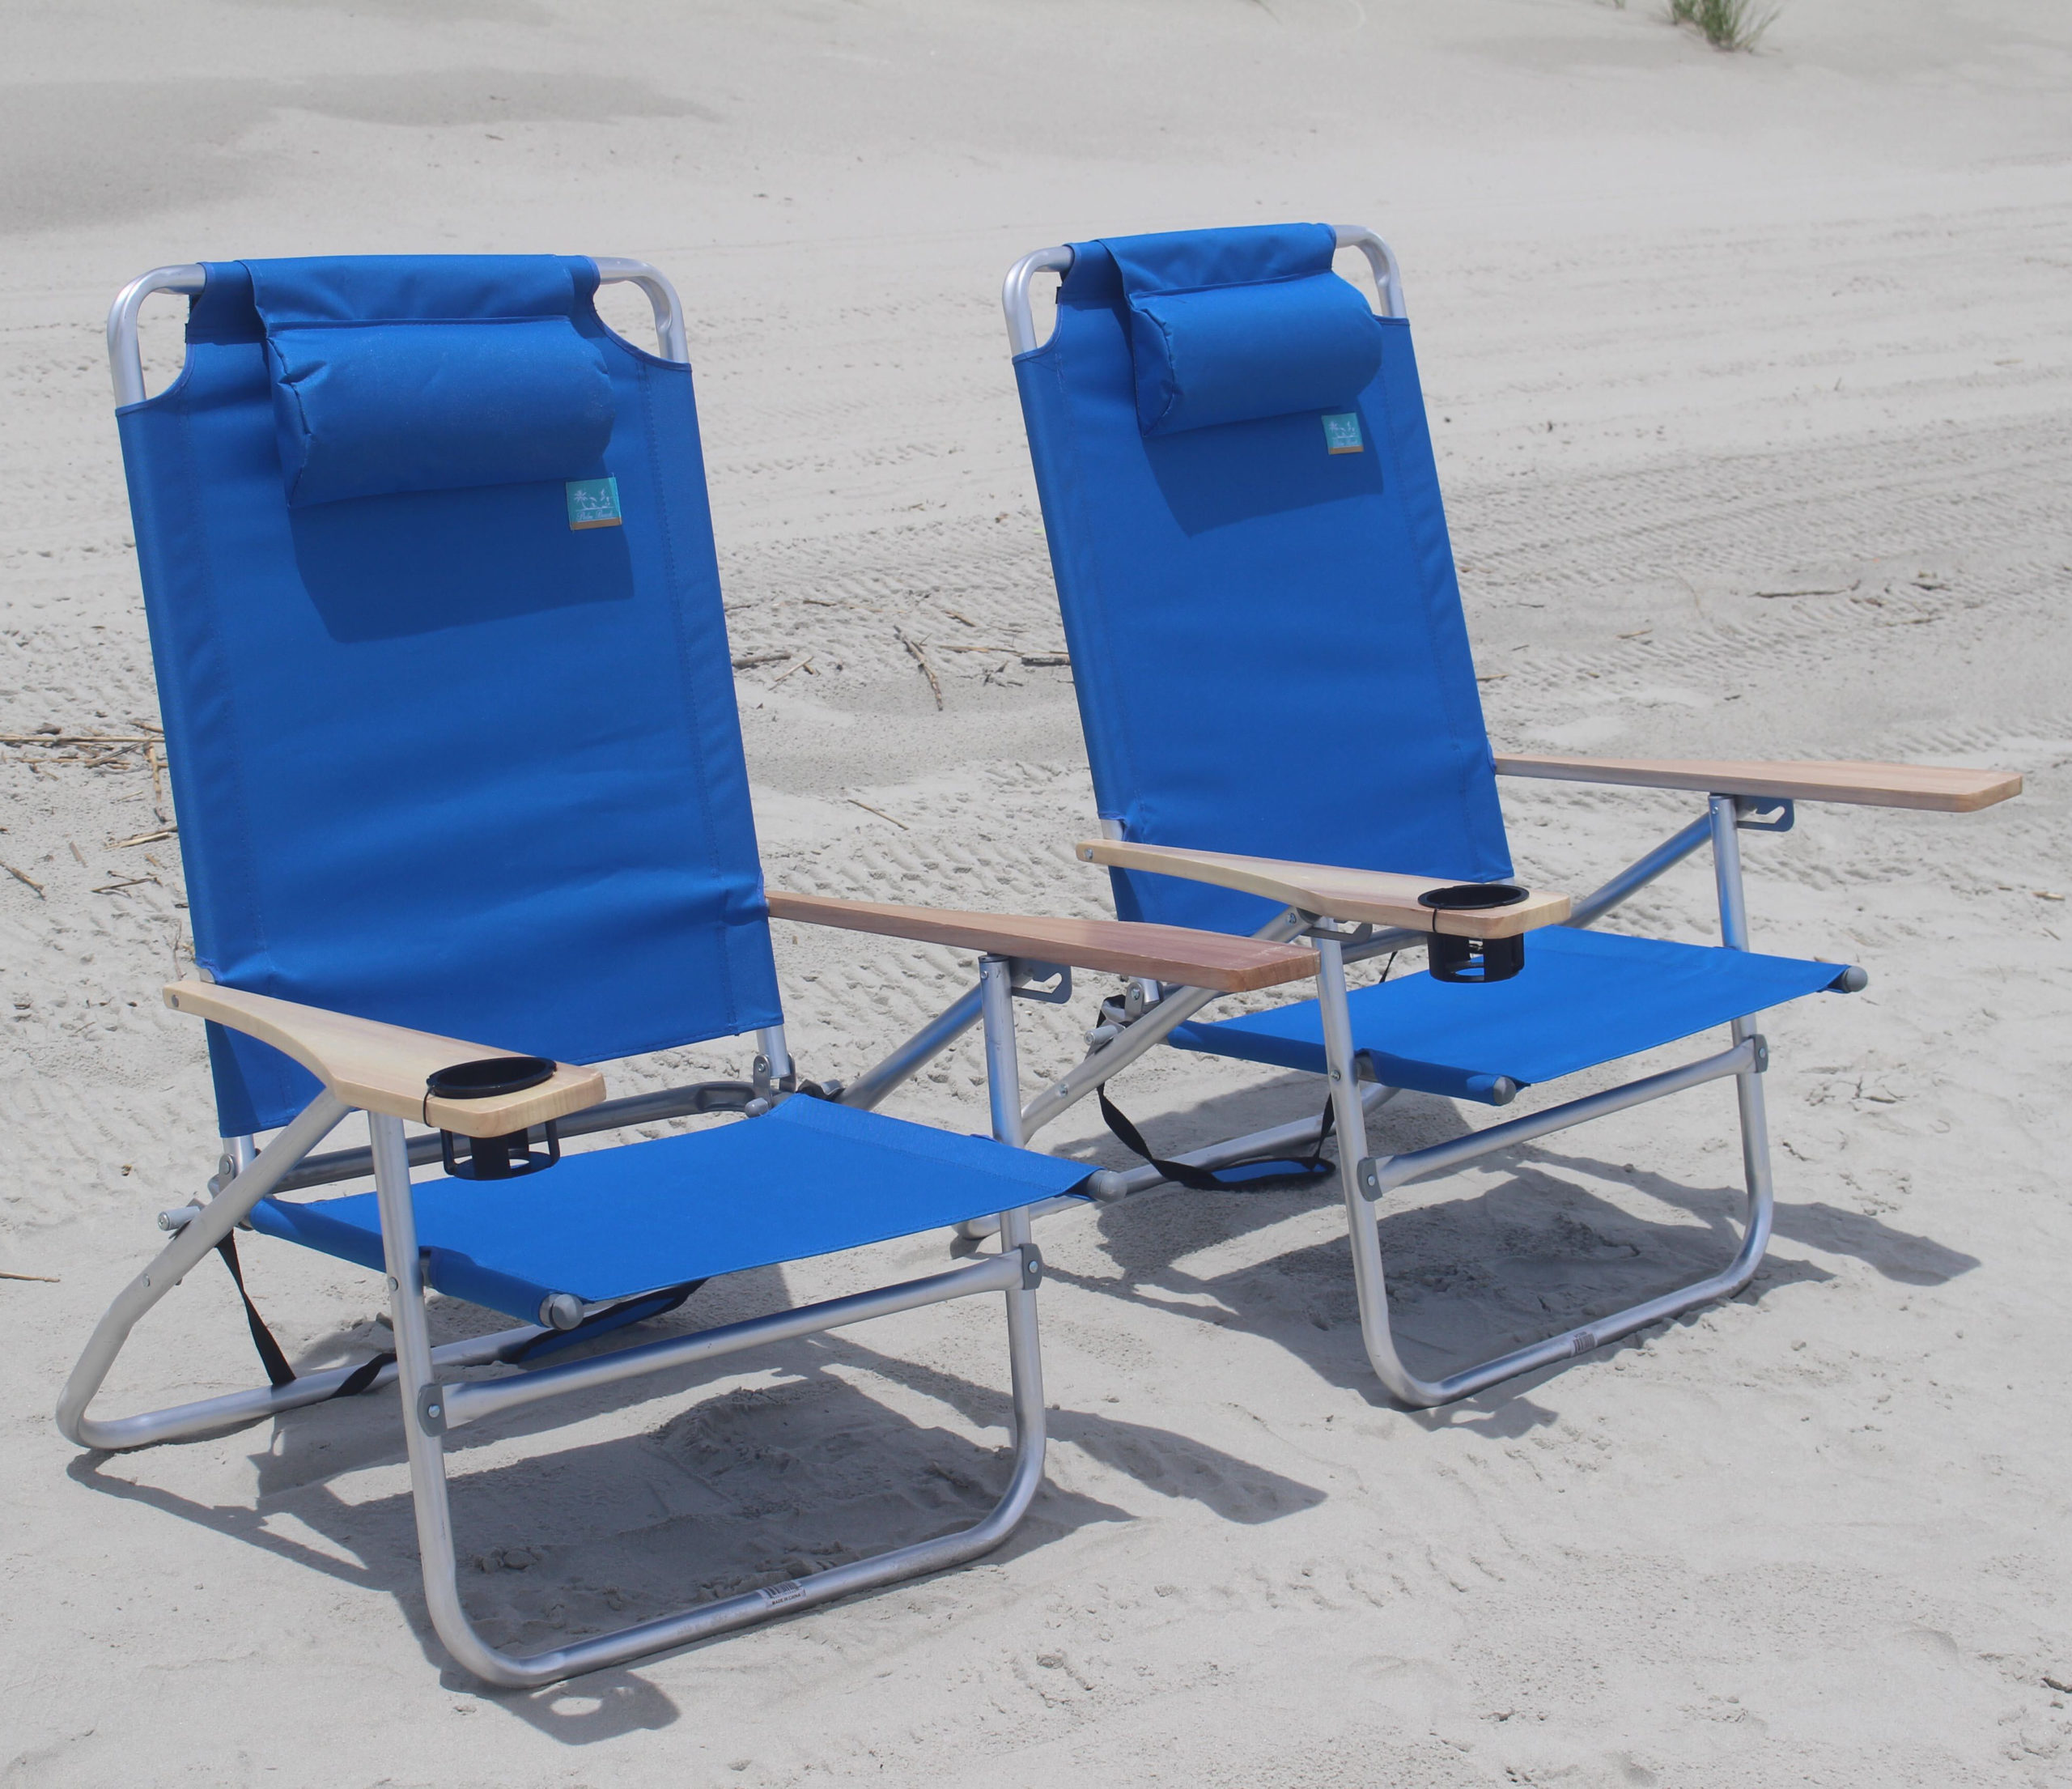 Minimalist Banje Beach Chair Rental with Simple Decor